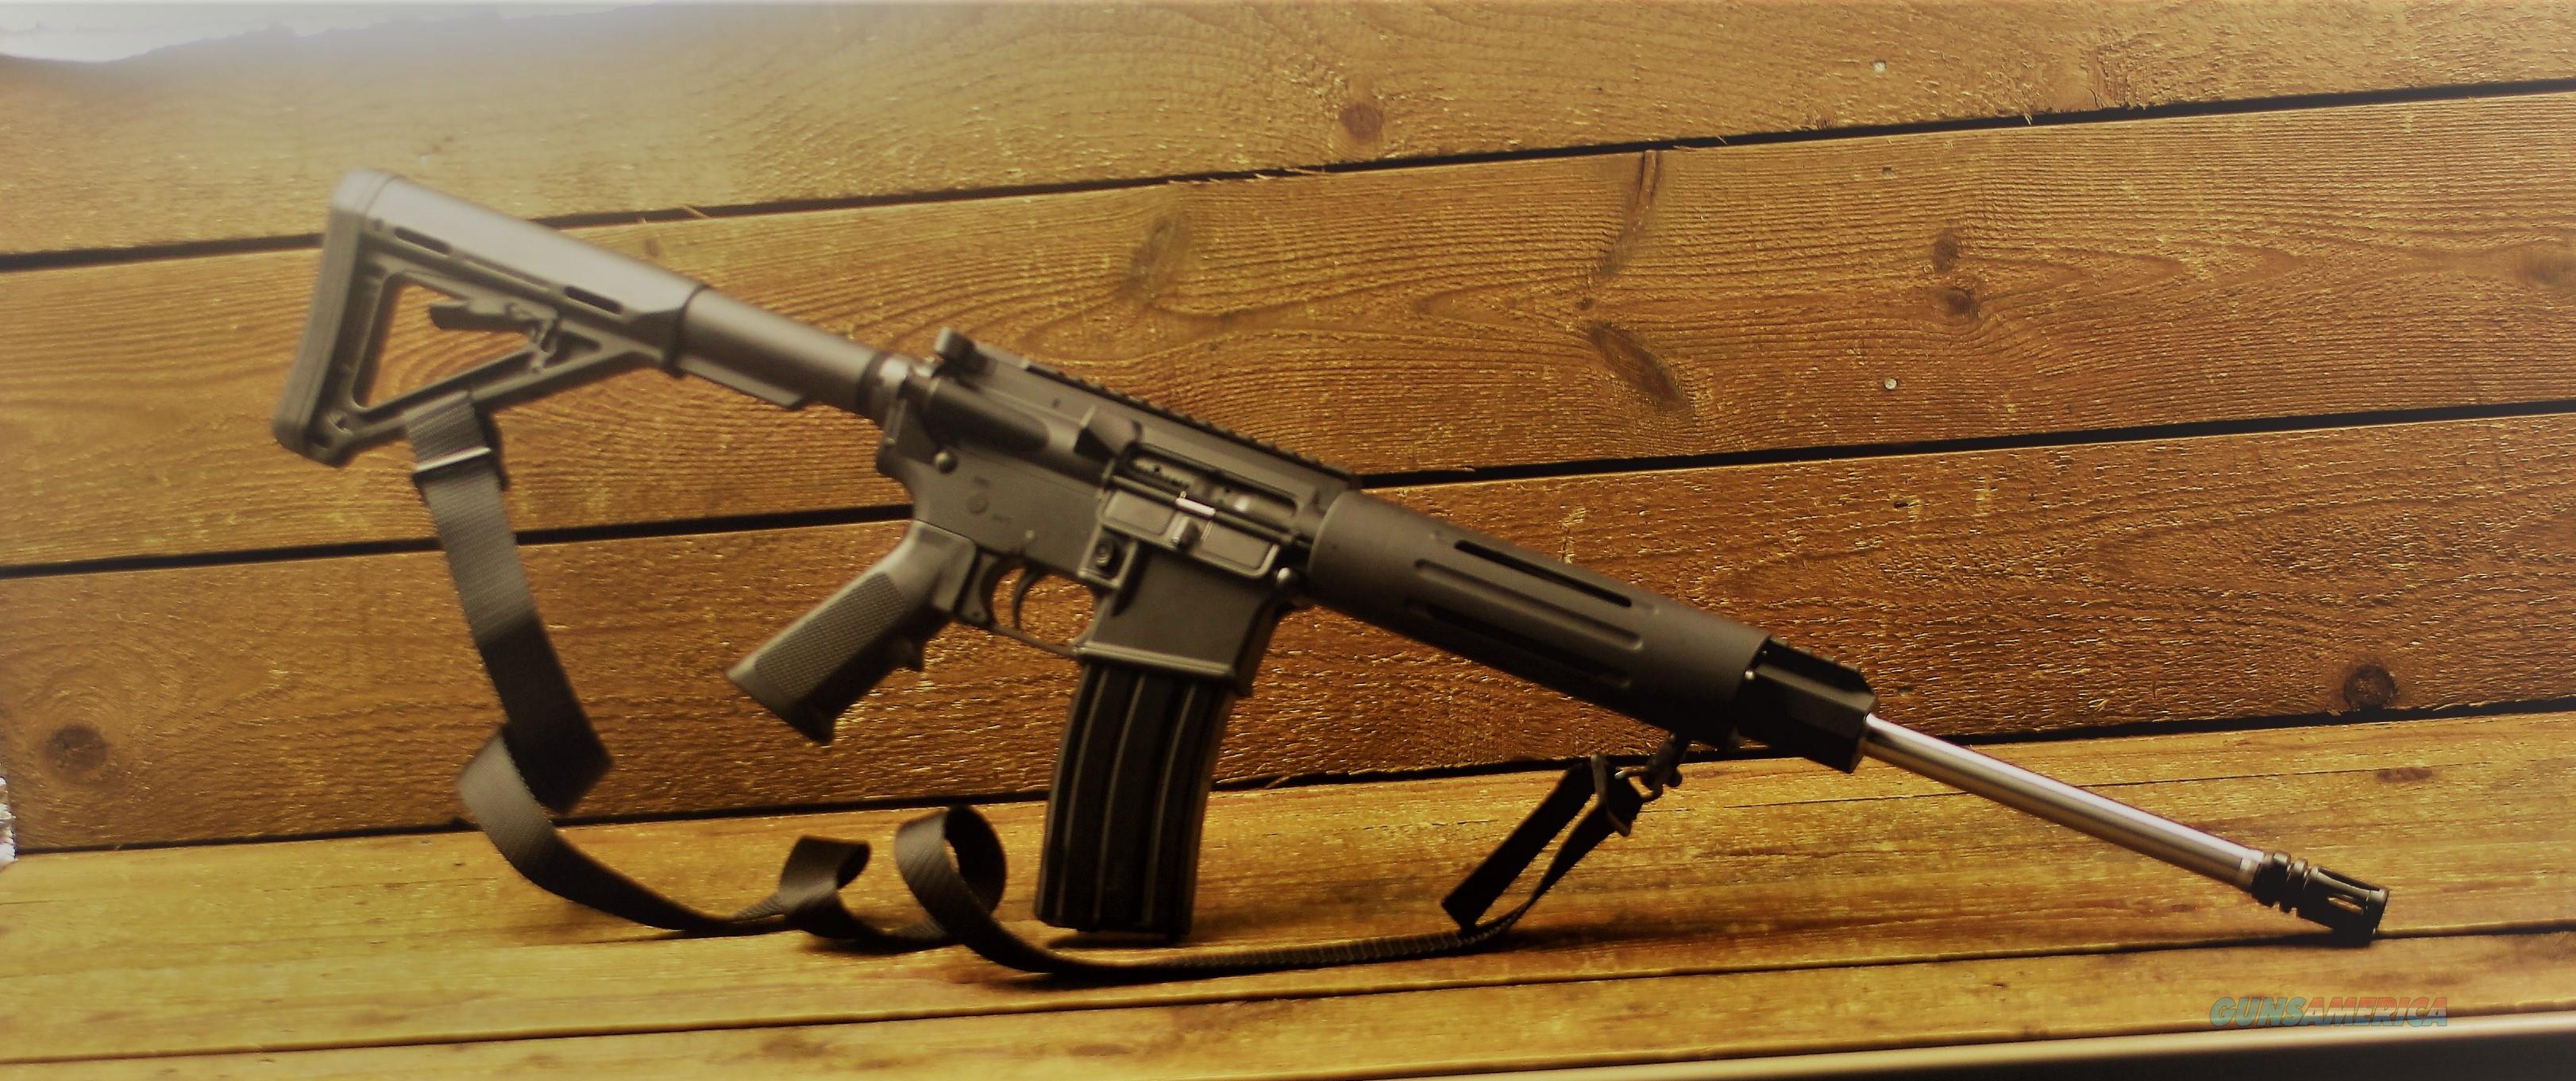 DPMS Panther LBR AR-15 Carbine 30 R... for sale at Gunsamerica.com ...